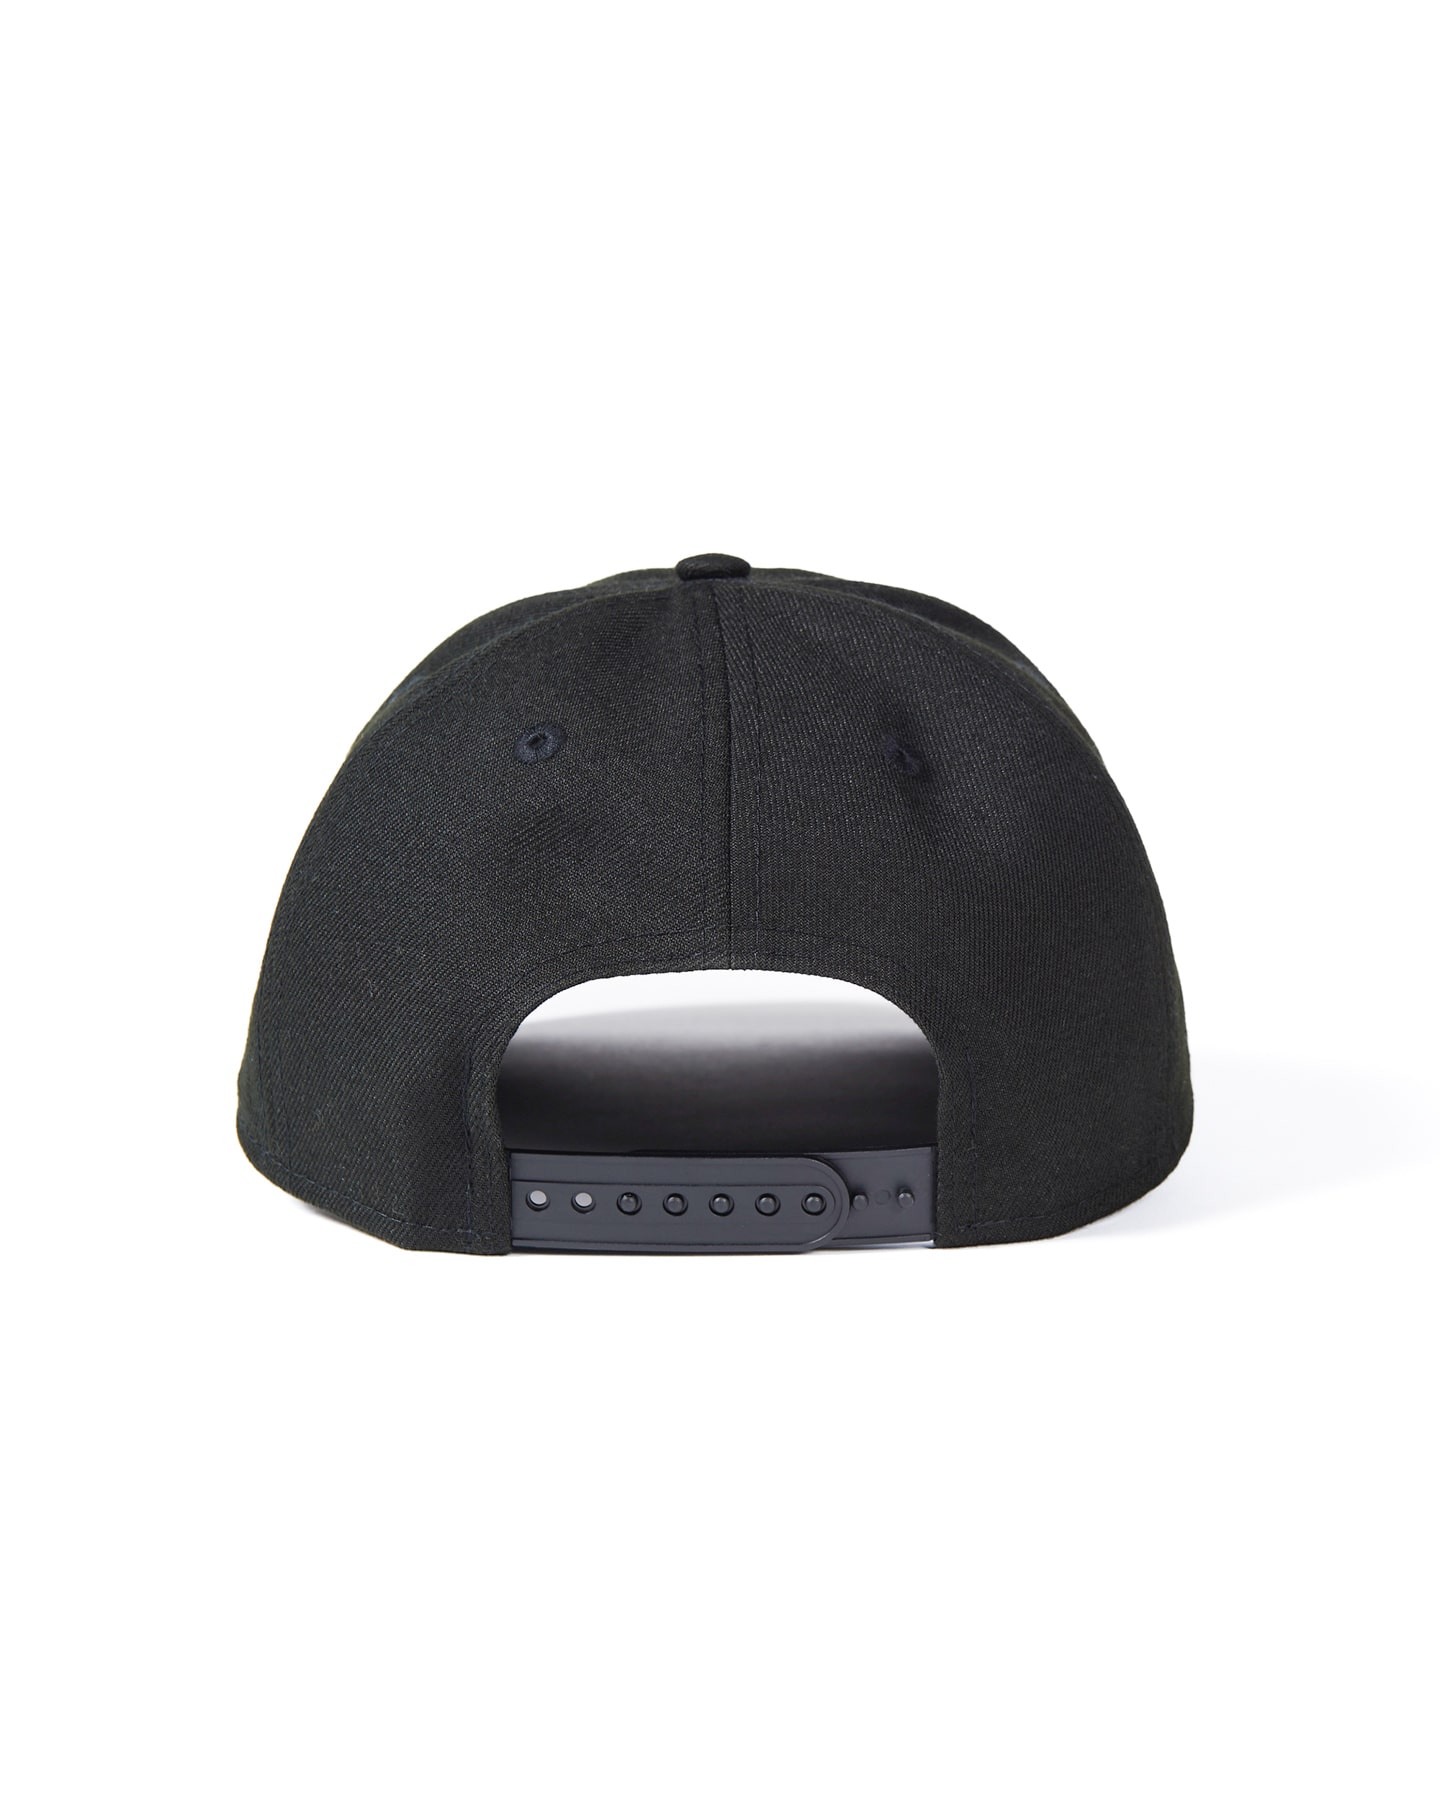 SOPH. | NEW ERA 9FIFTY LOW PROFILE CAP(FREE BLACK):